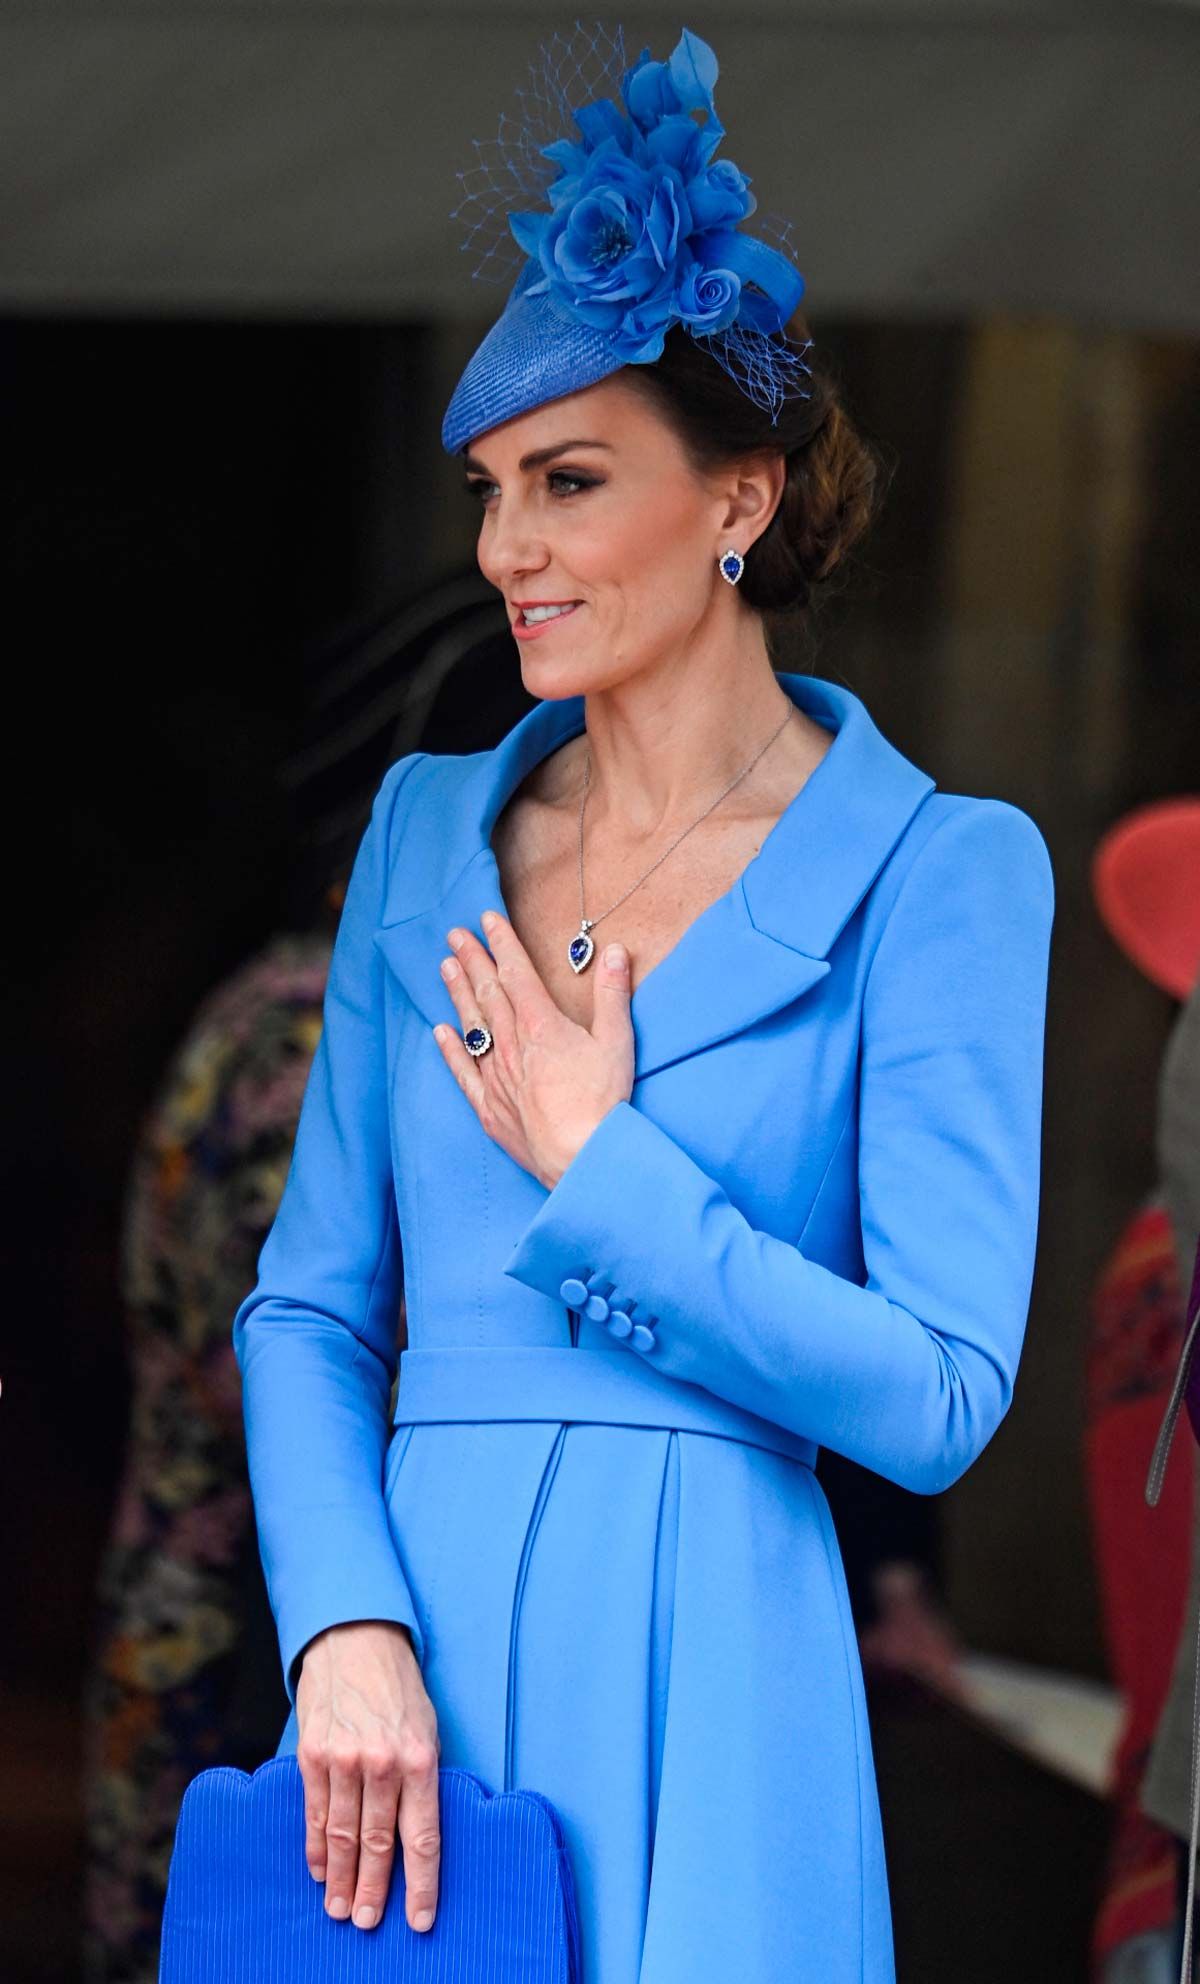 La (no) manicura de Kate Middleton, con las uñas sin esmalte